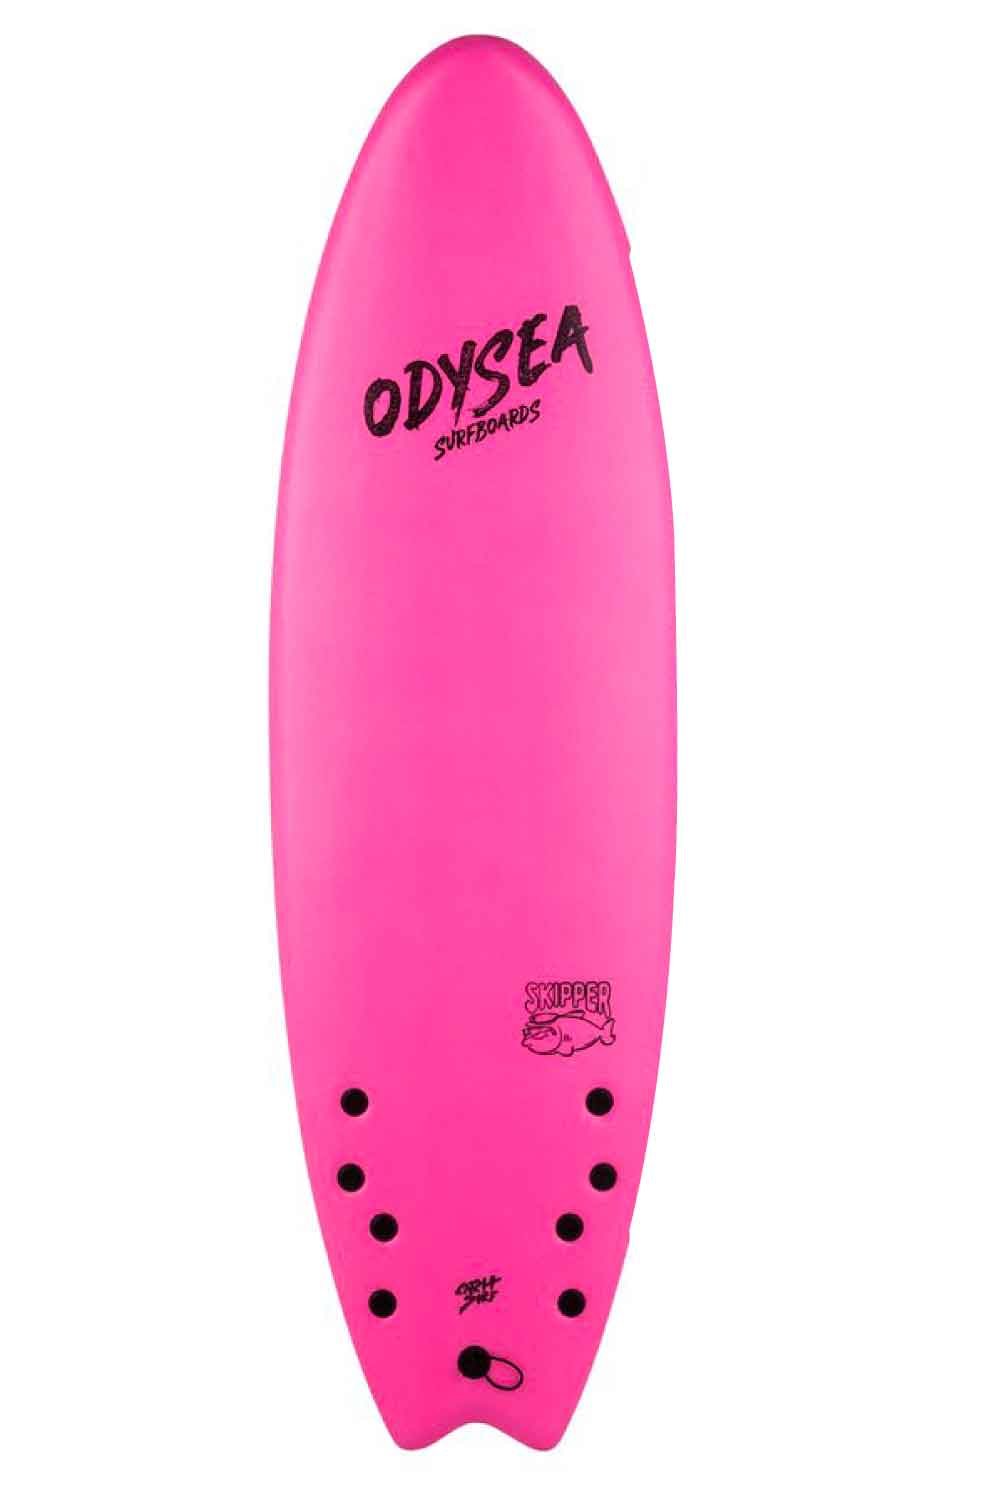 Catch Surf JOB Jamie O'Brien Odysea Skipper Softboard pink